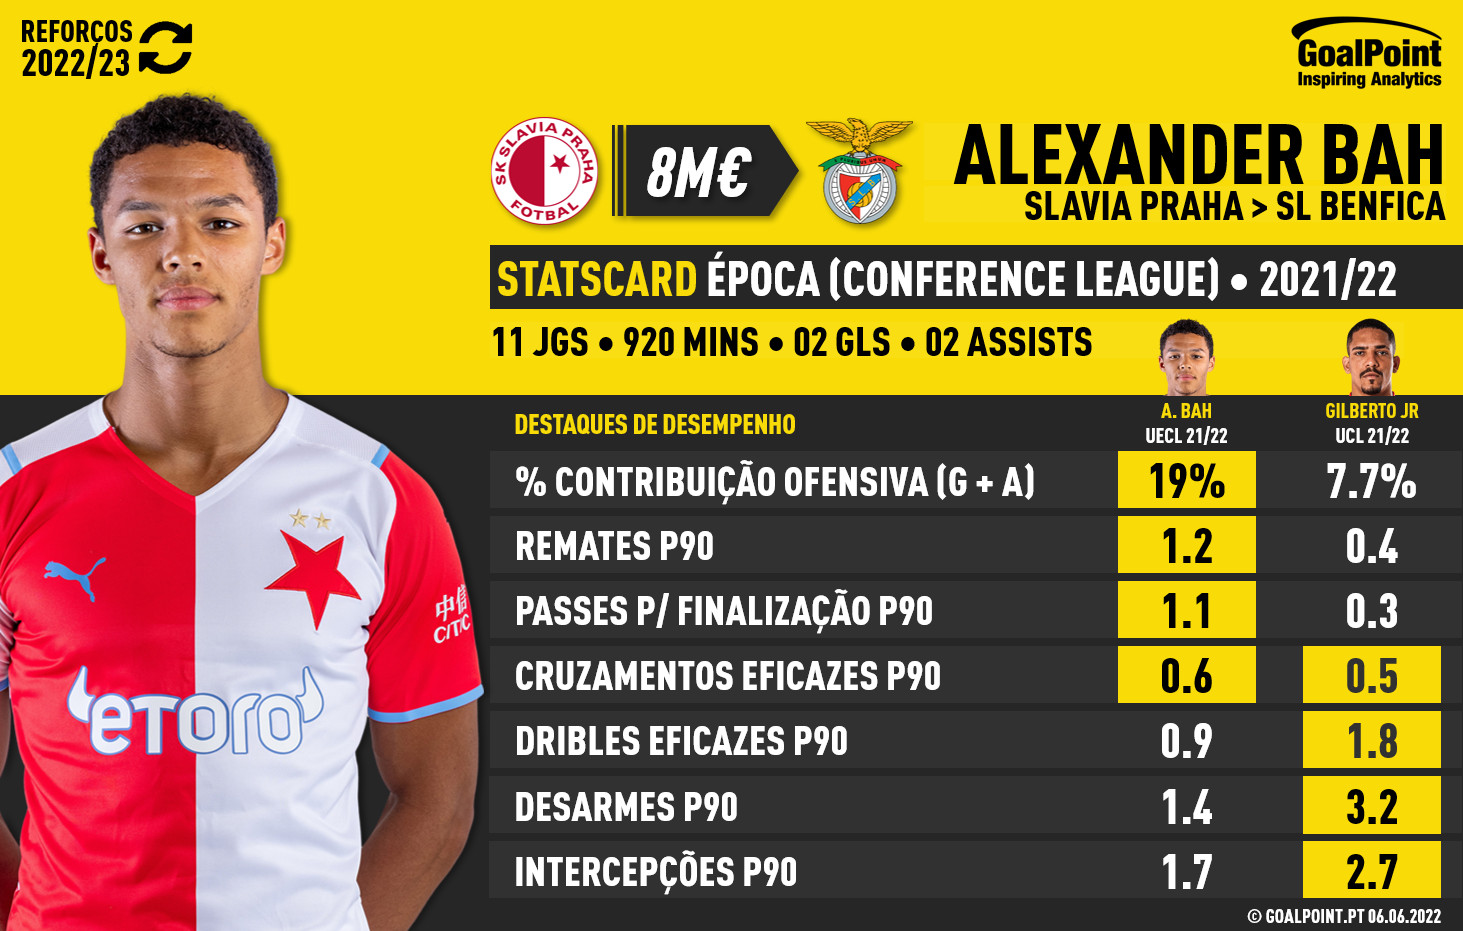 GoalPoint-Alexander-Bah-Gilberto-Benfica-infog